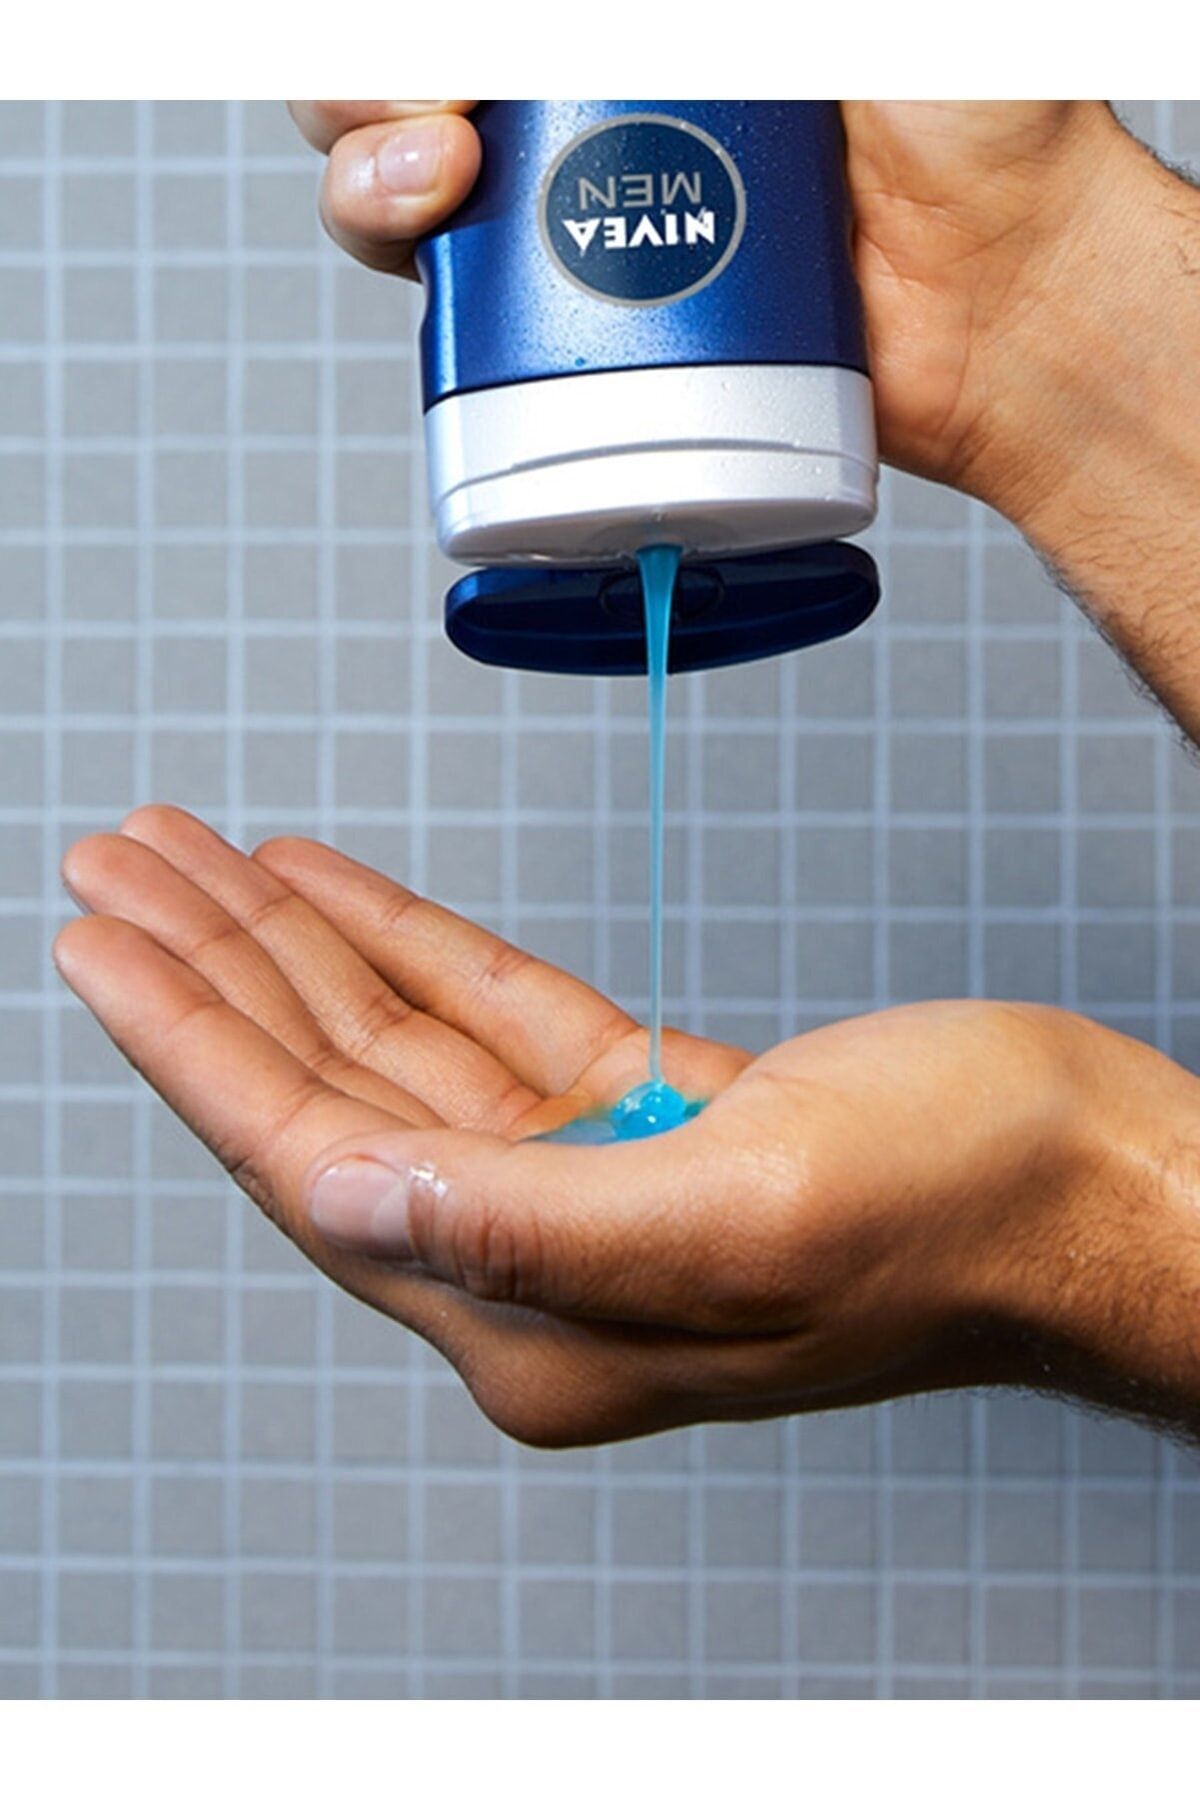 NIVEA ژل حمام انرژی‌بخش مردانه 500 میلی‌لیتر، 3 عدد مراقبت کامل، بدن، مو و صورت مردان